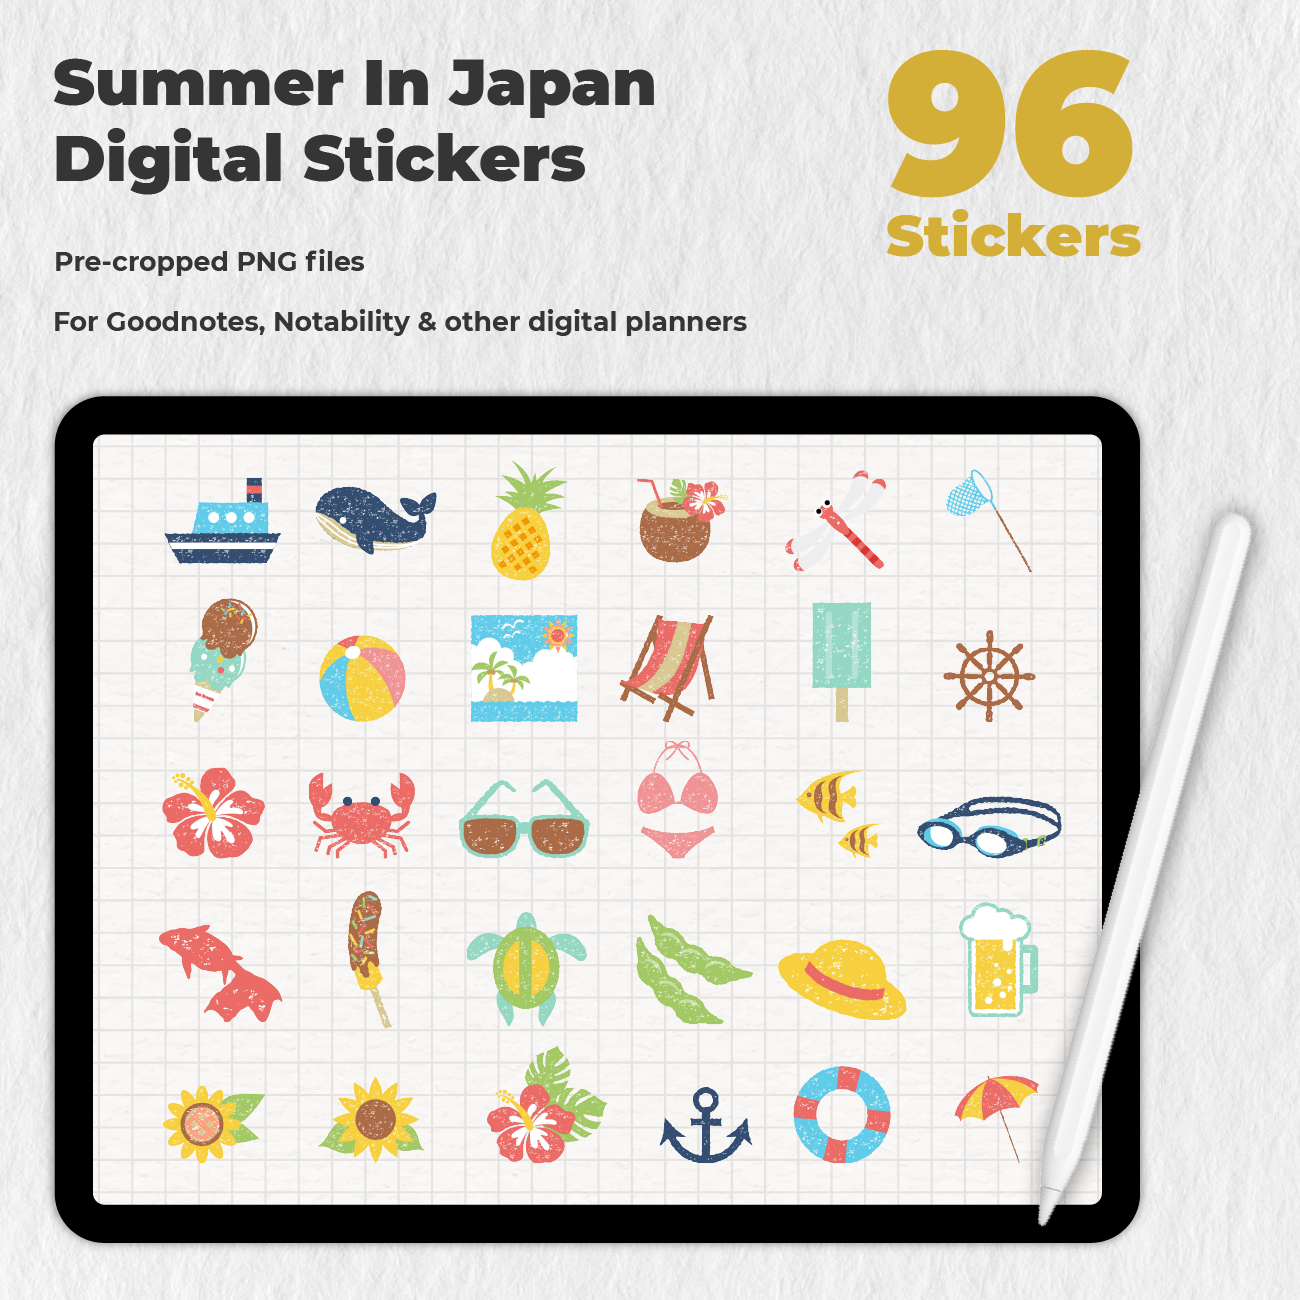 96 Summer In Japan Digital Stickers